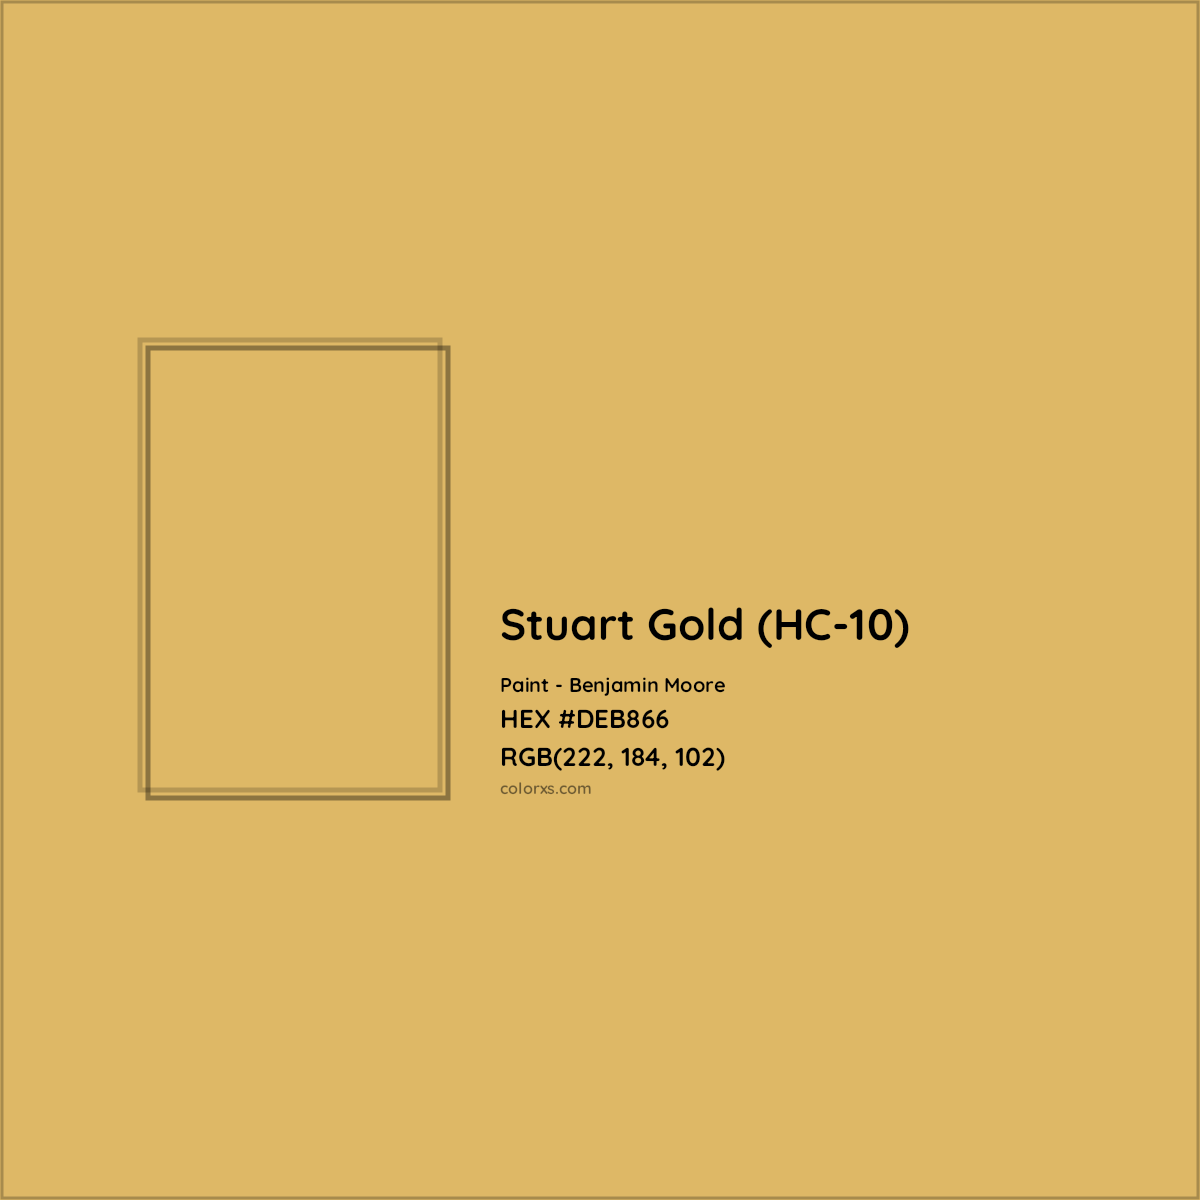 HEX #DEB866 Stuart Gold (HC-10) Paint Benjamin Moore - Color Code